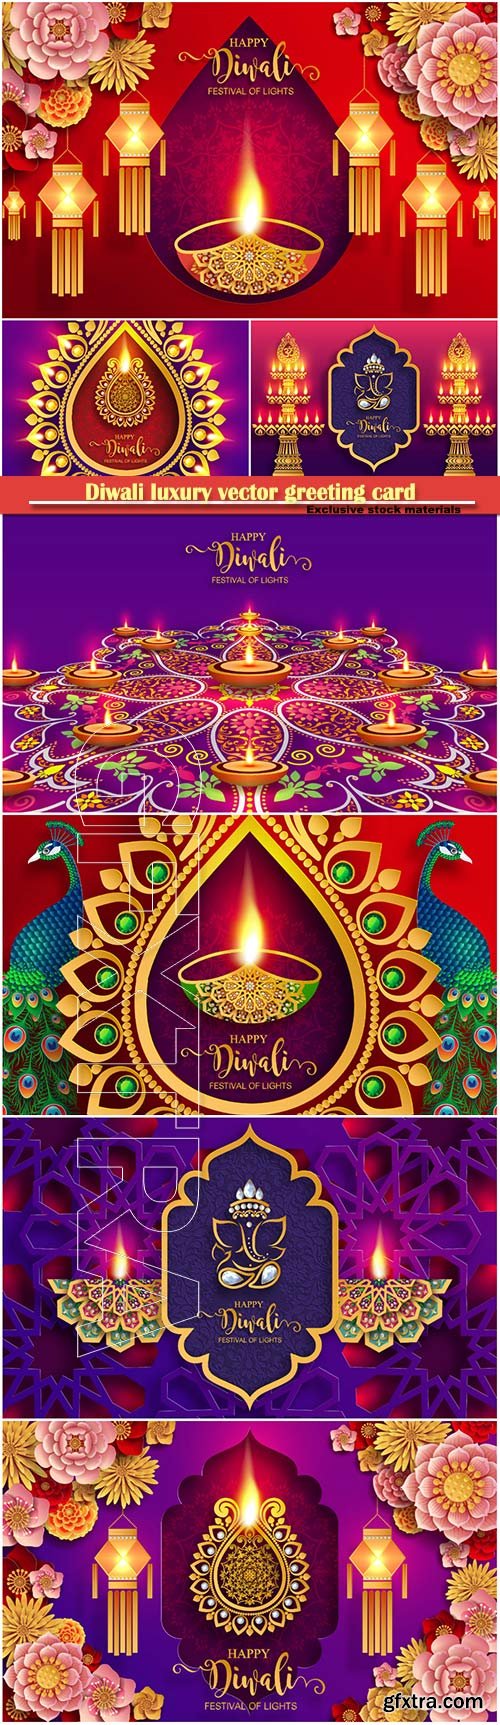 Diwali luxury vector greeting card # 4